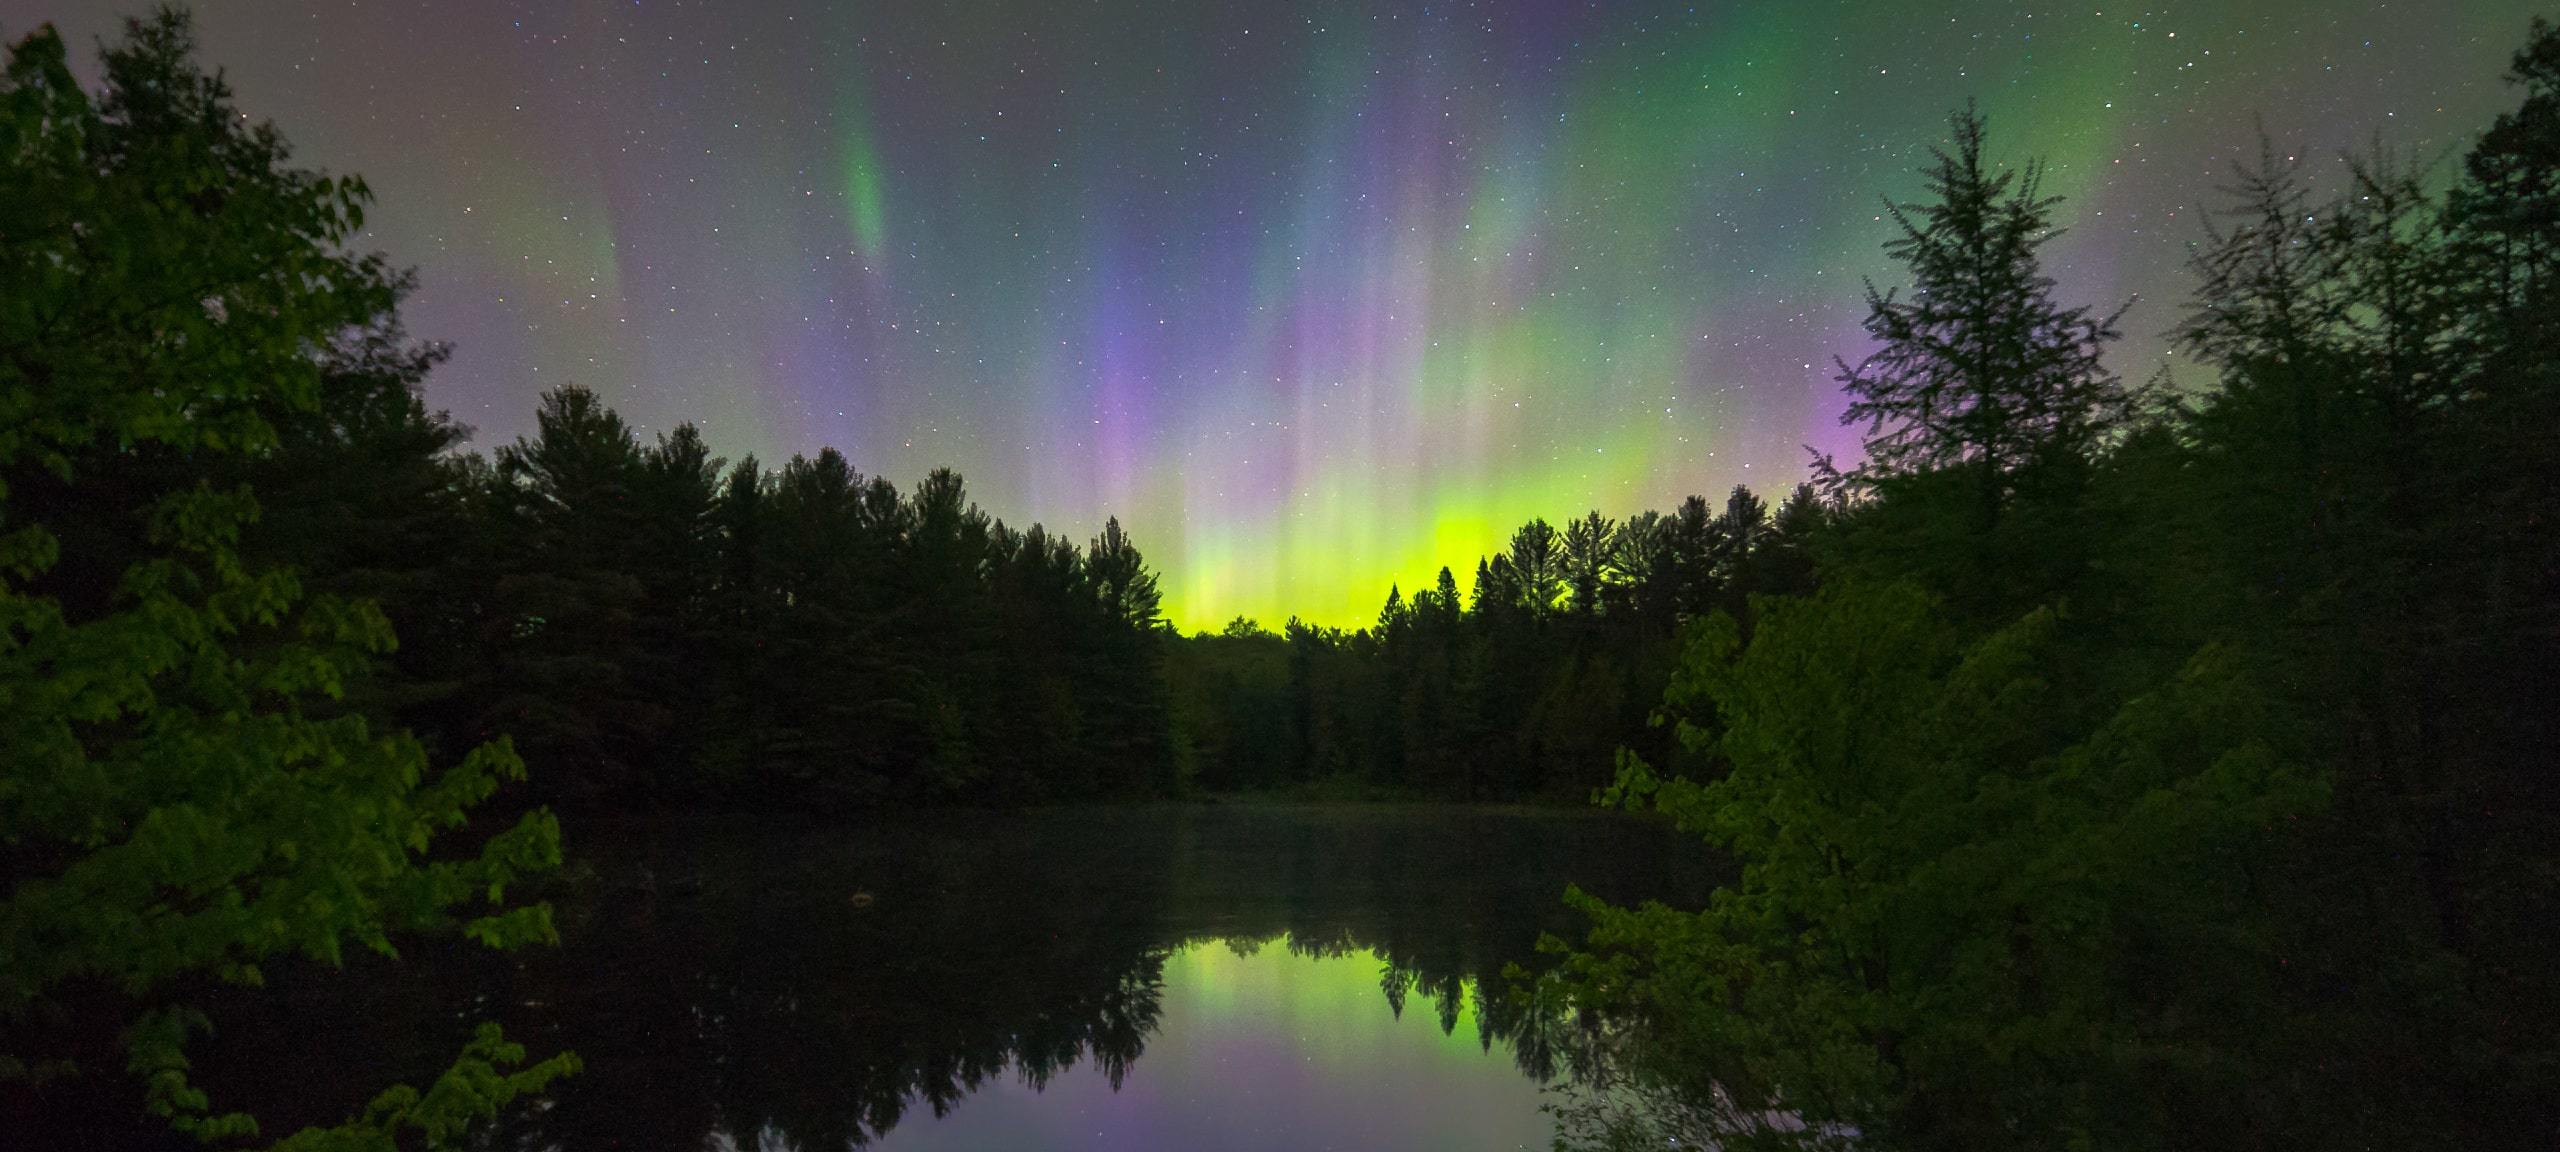 Northern lights over Muskoka Lakes, ON region